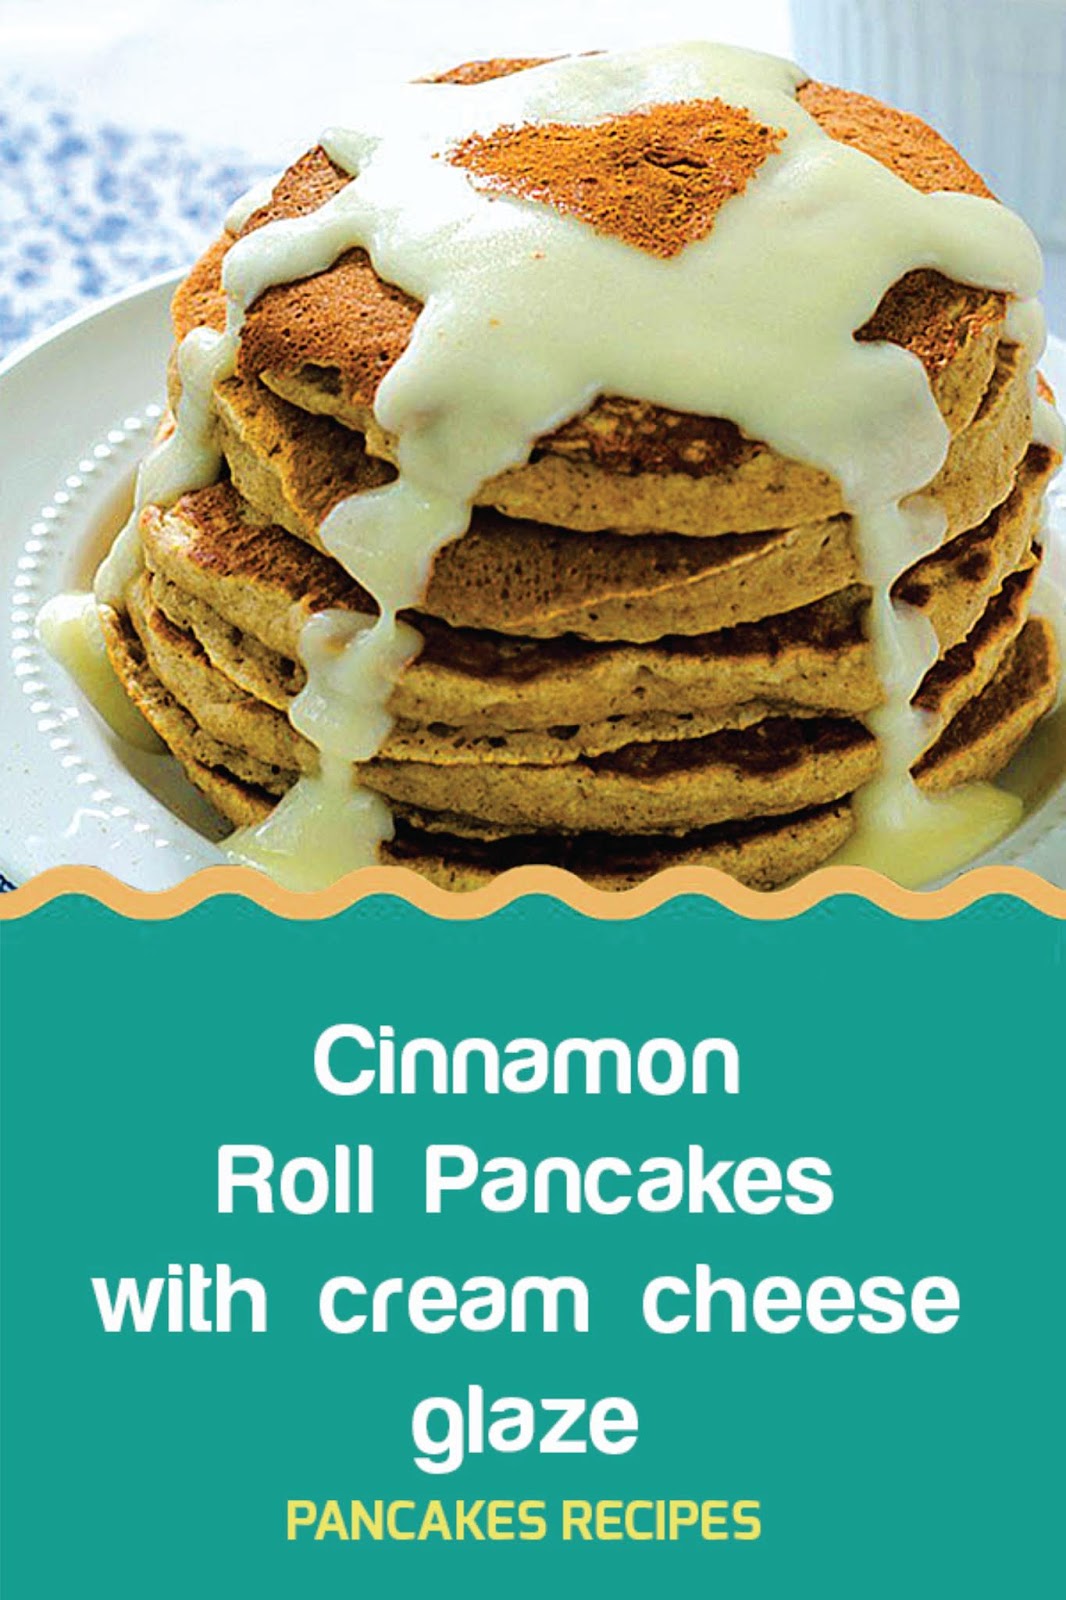 Sweet Cinnamon Roll Pancakes with cream cheese glaze